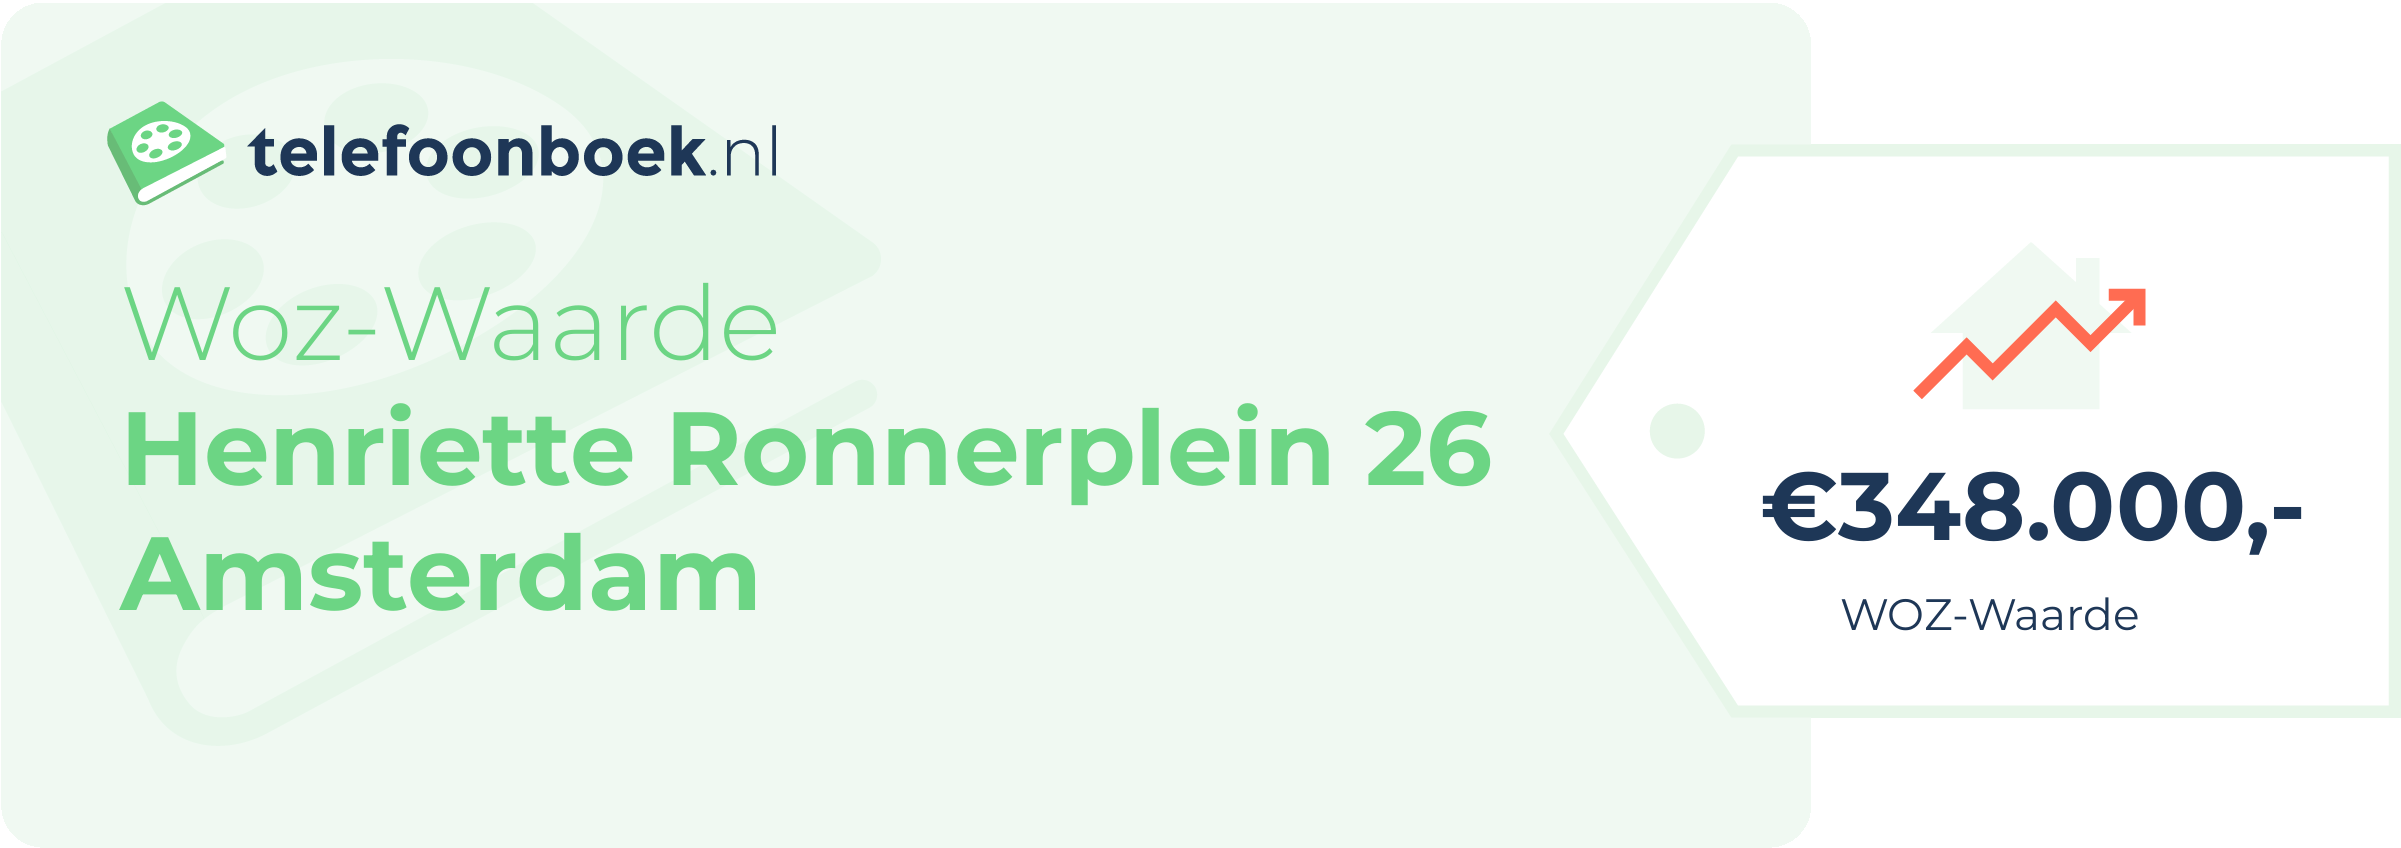 WOZ-waarde Henriette Ronnerplein 26 Amsterdam